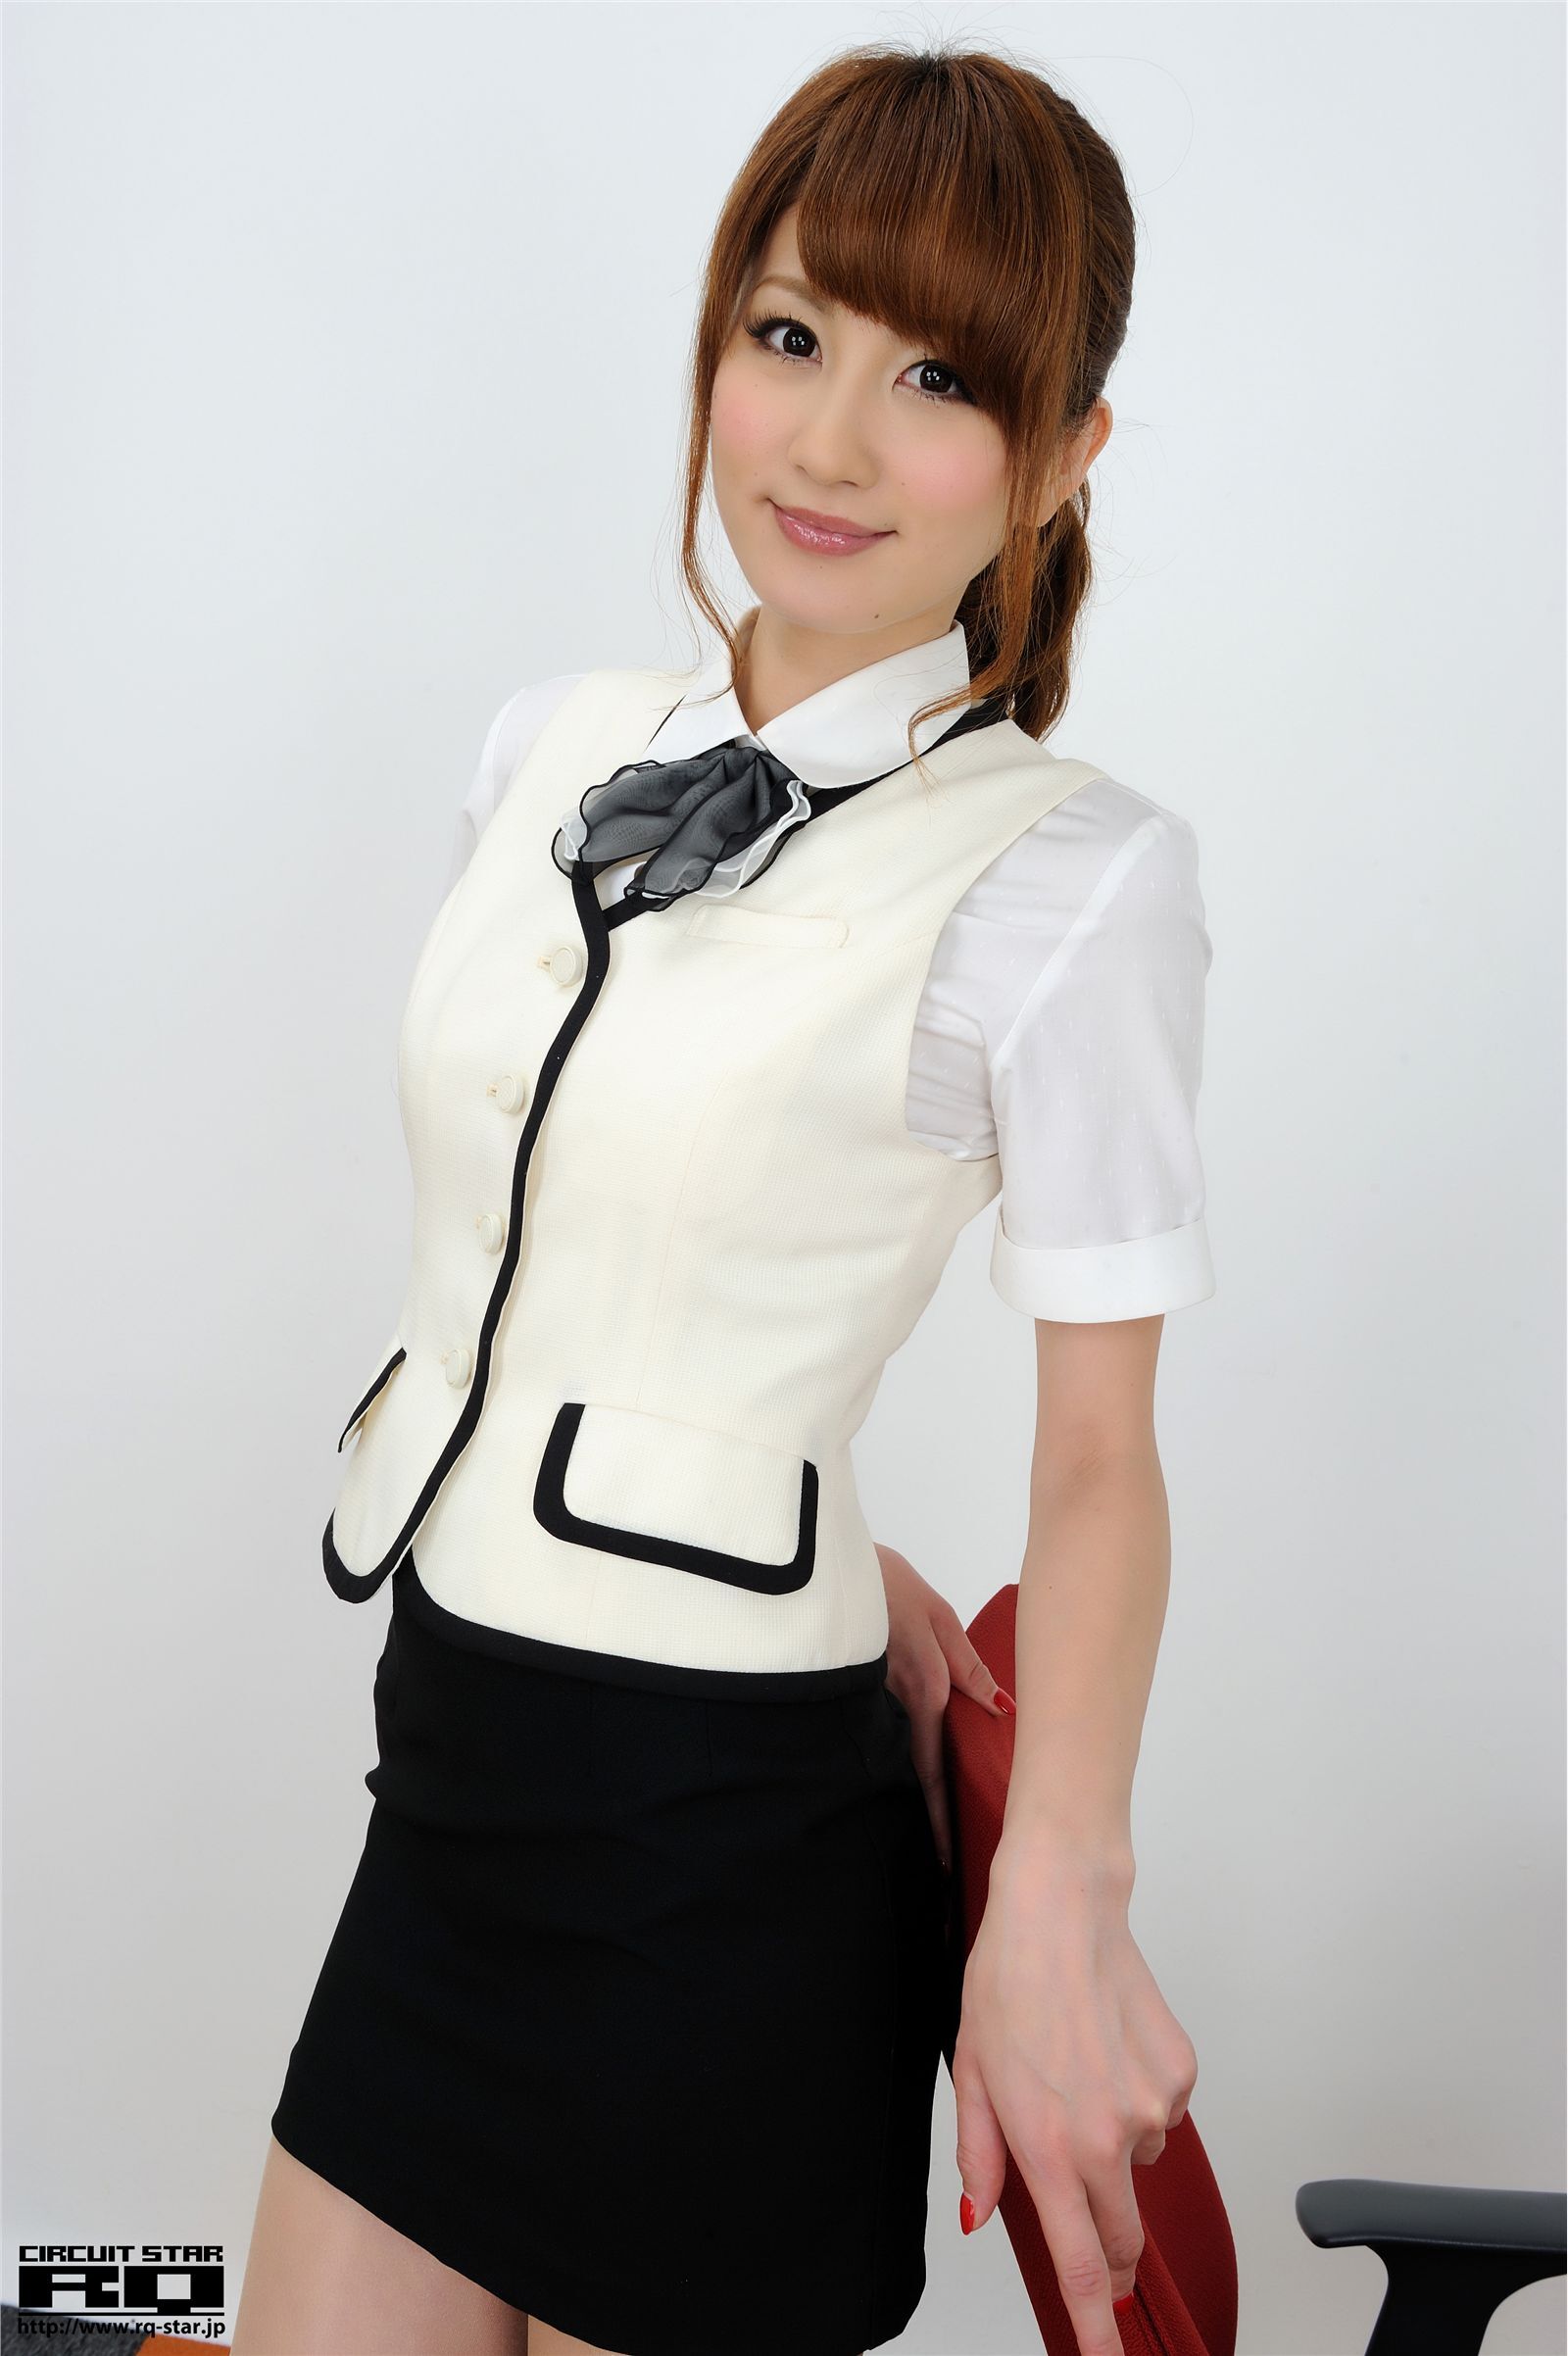 The uniform girl of Qiantian zhenma [RQ star] [05-11] no.00635 Office